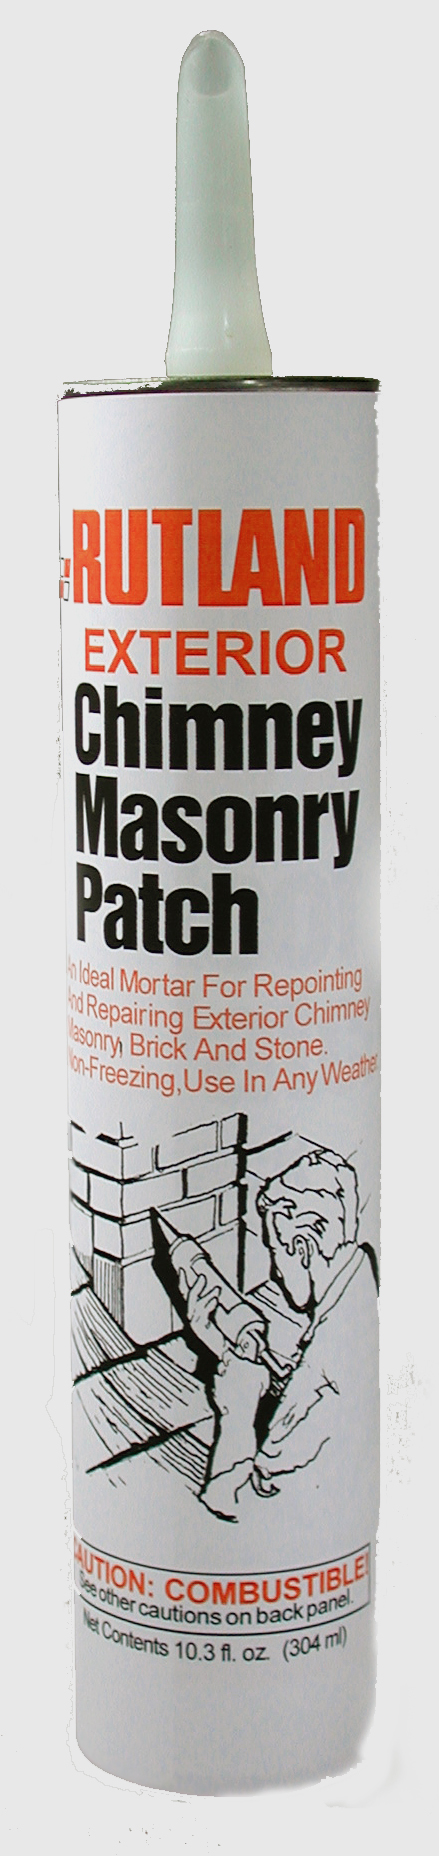 CHIMNEY MASONRY PATCH - Exterior  10.3 oz. Cartridge